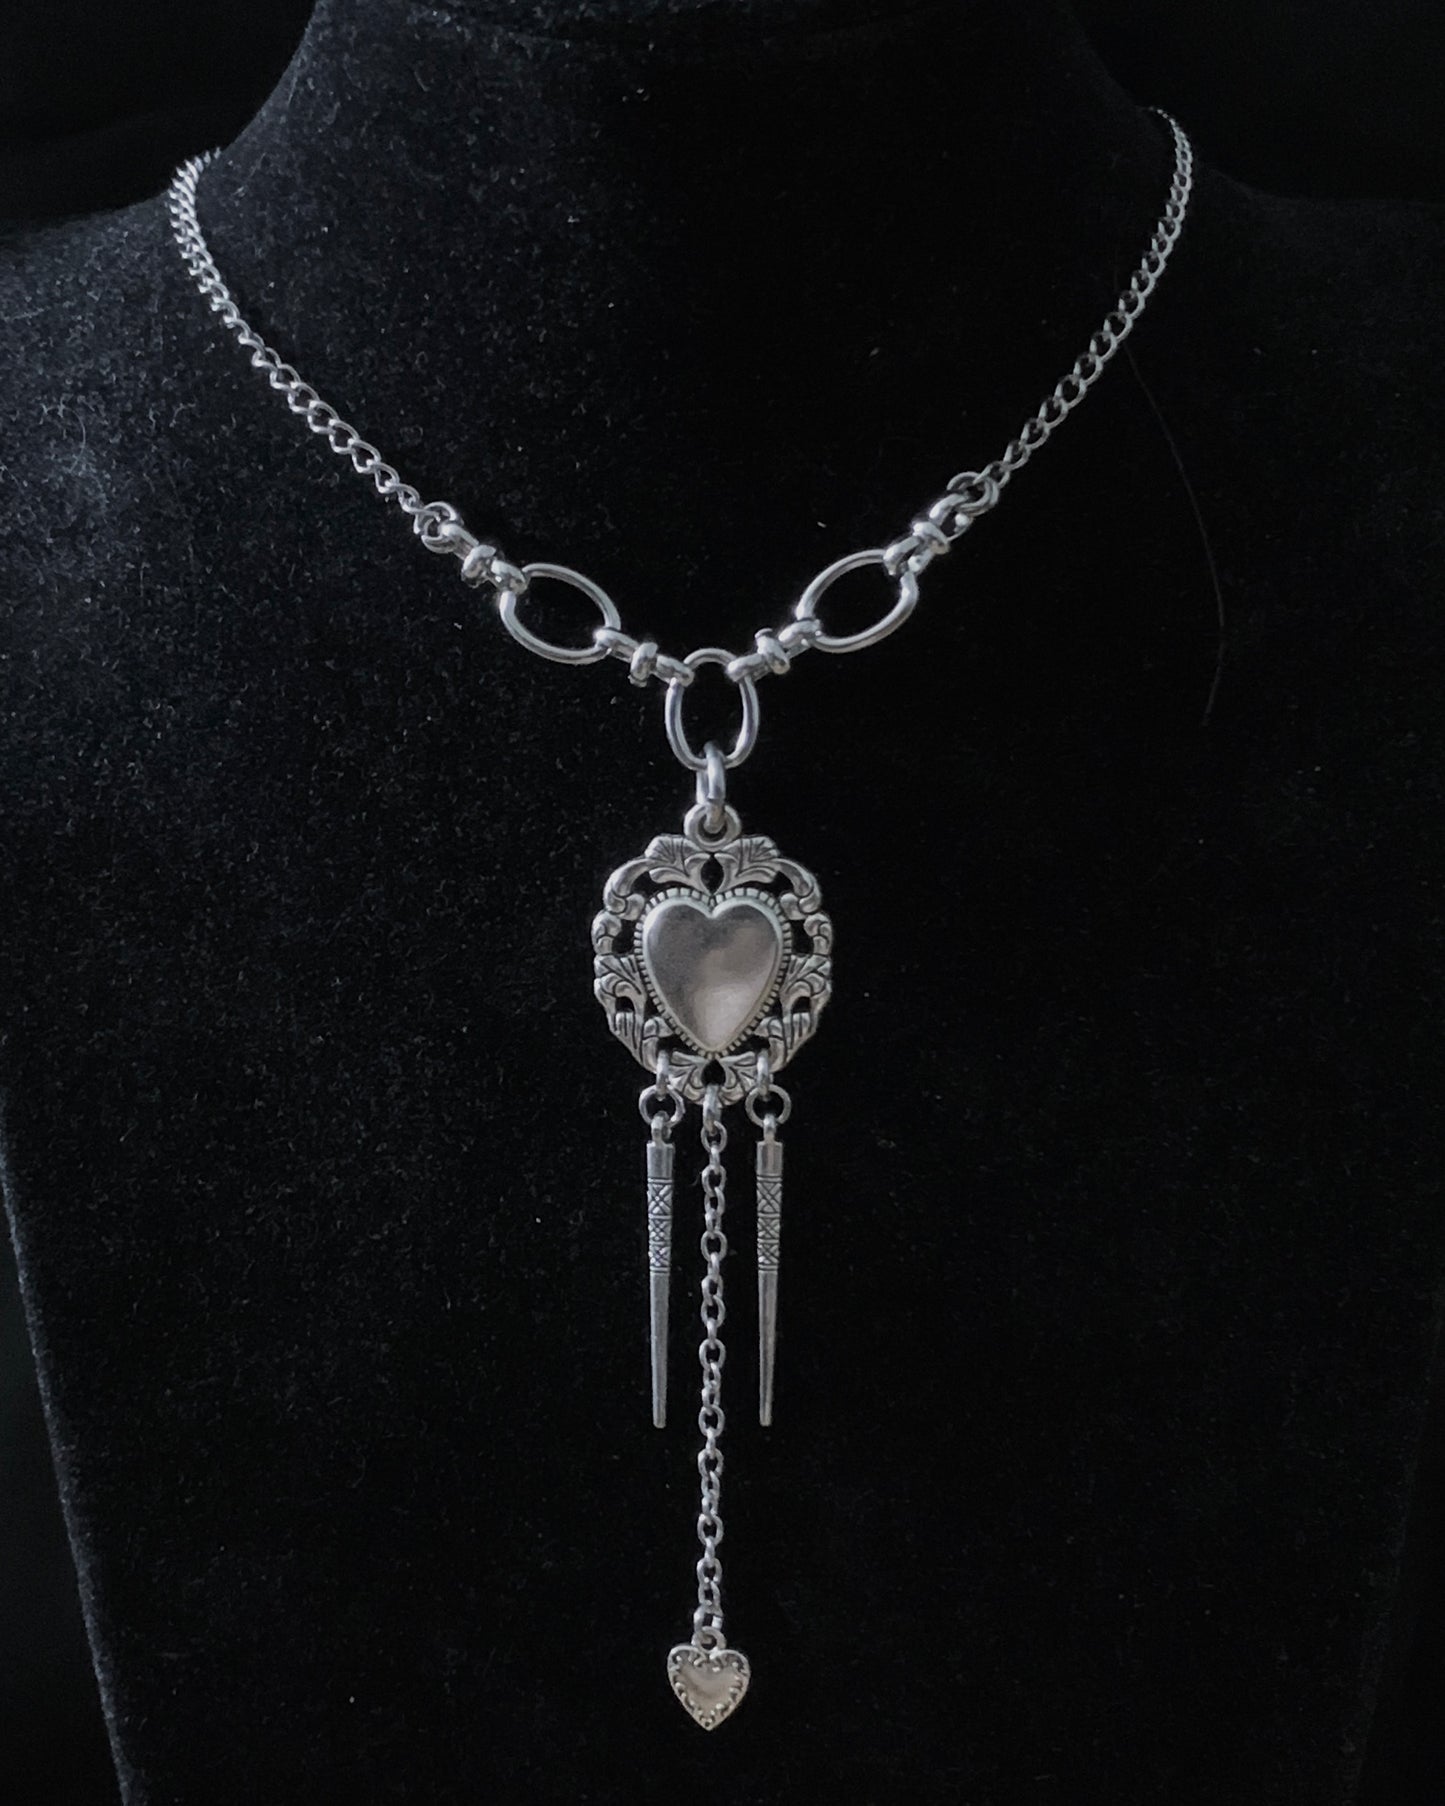 Opium necklace